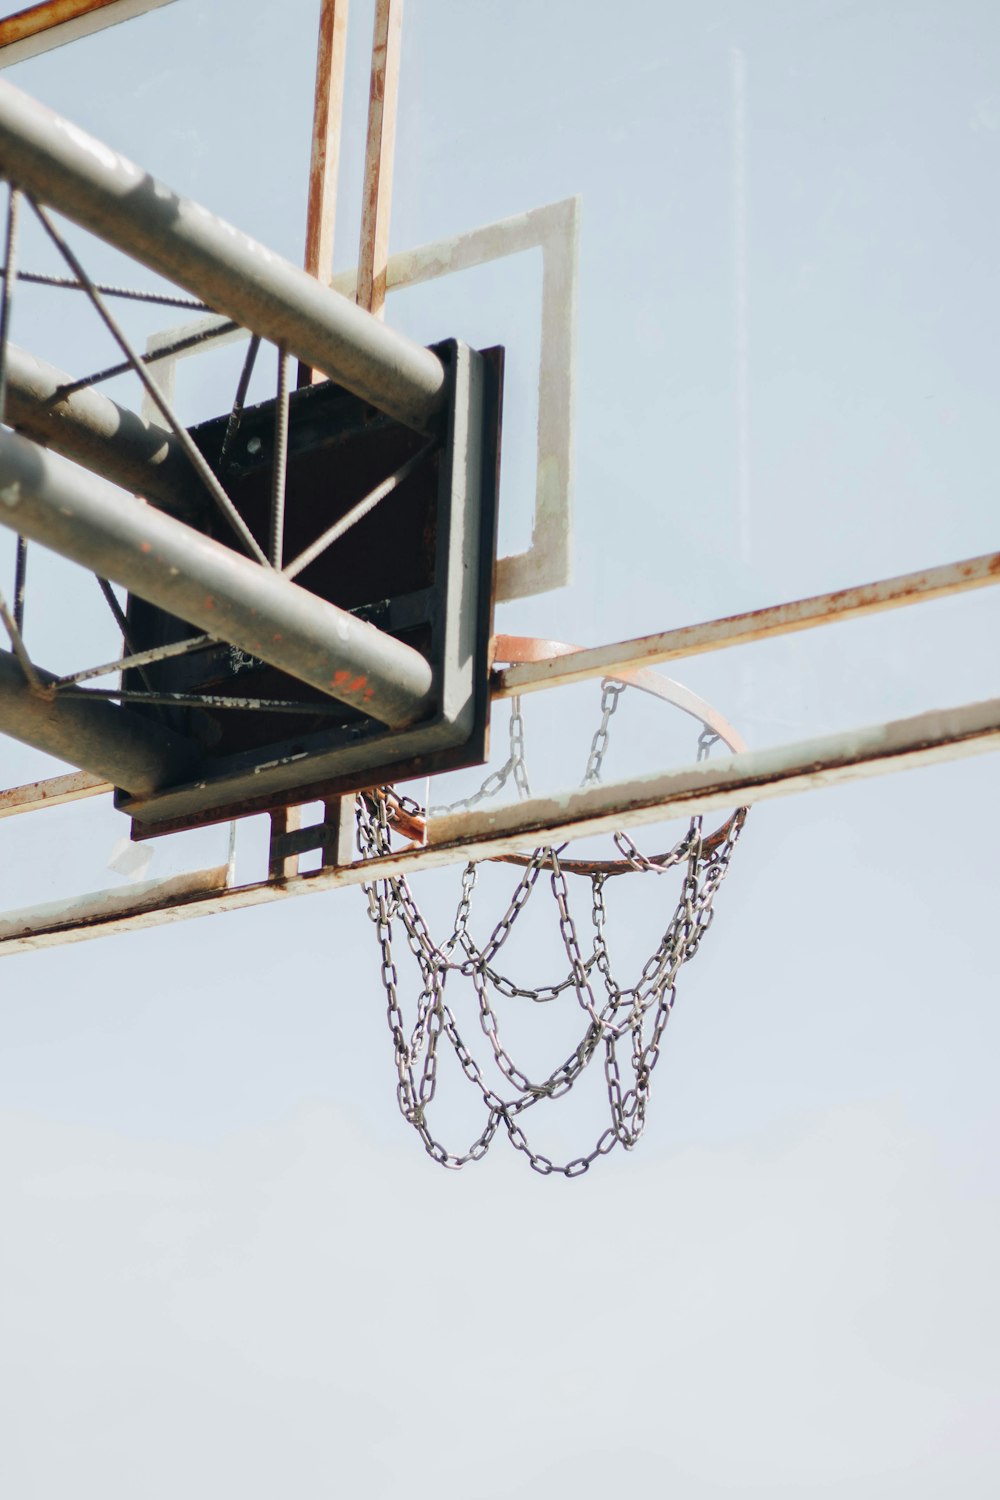 a basketball hoop with a basketball